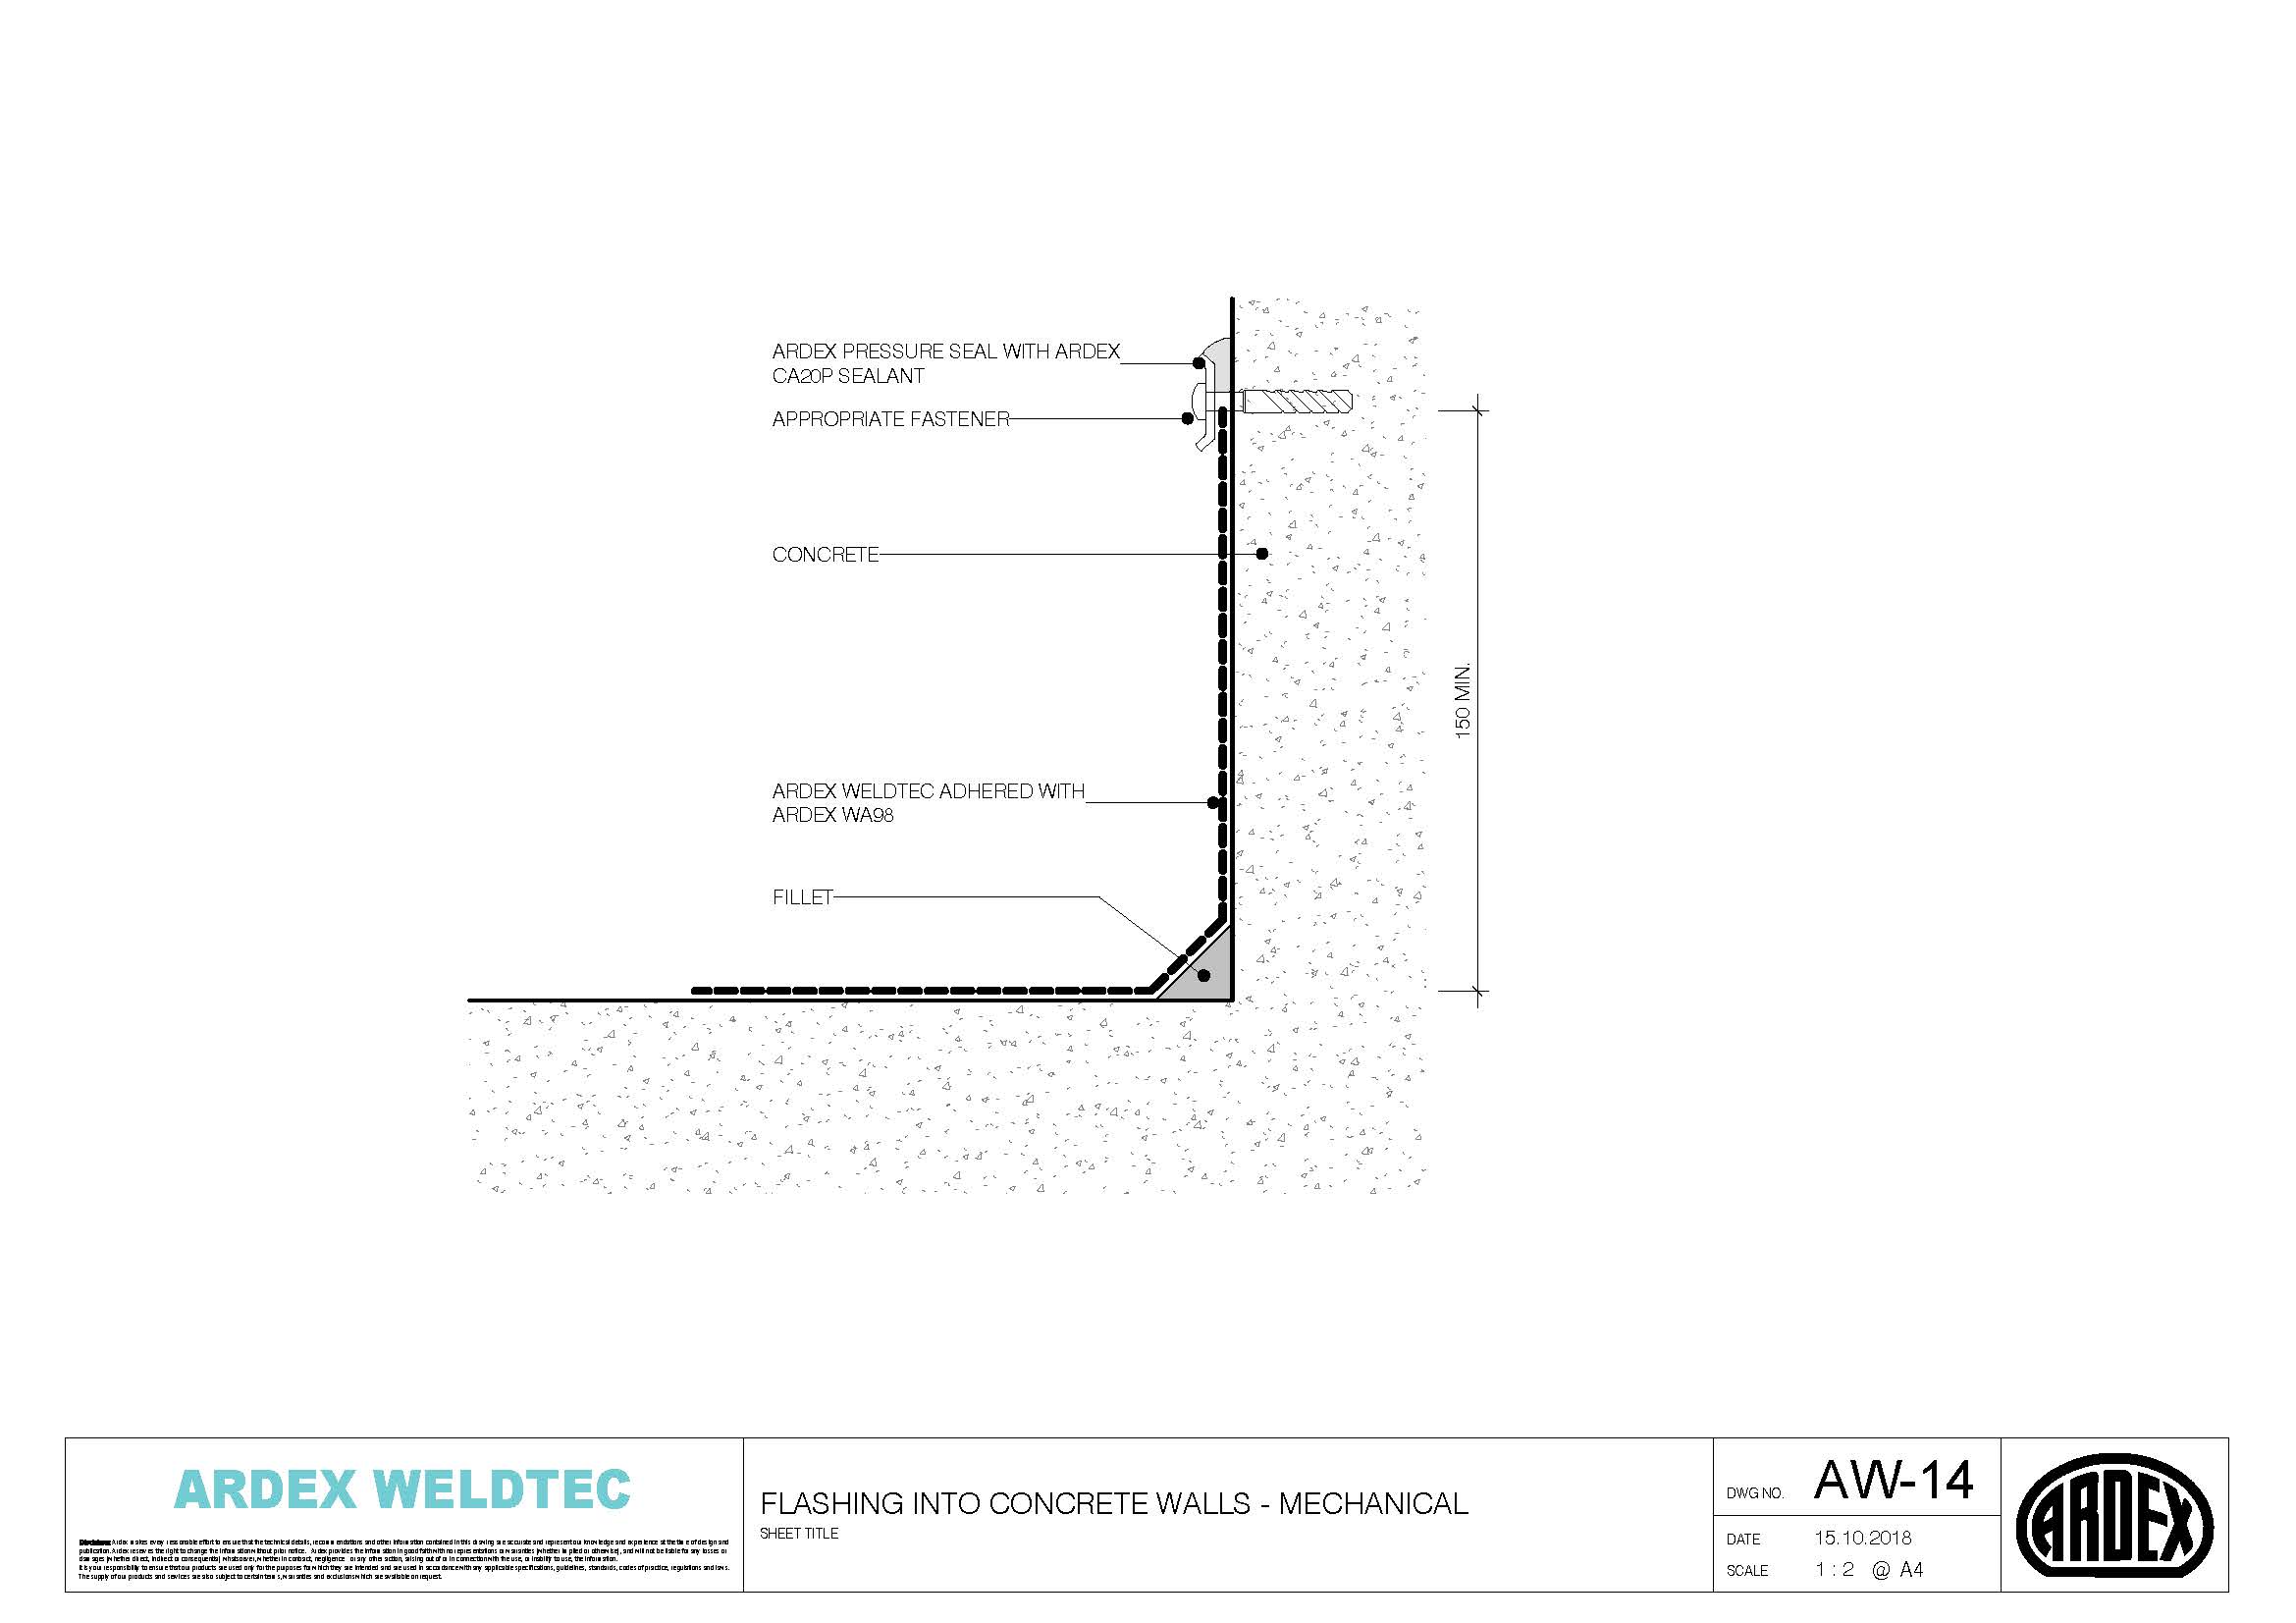 Weldtec flashing into concrete walls - mechanical